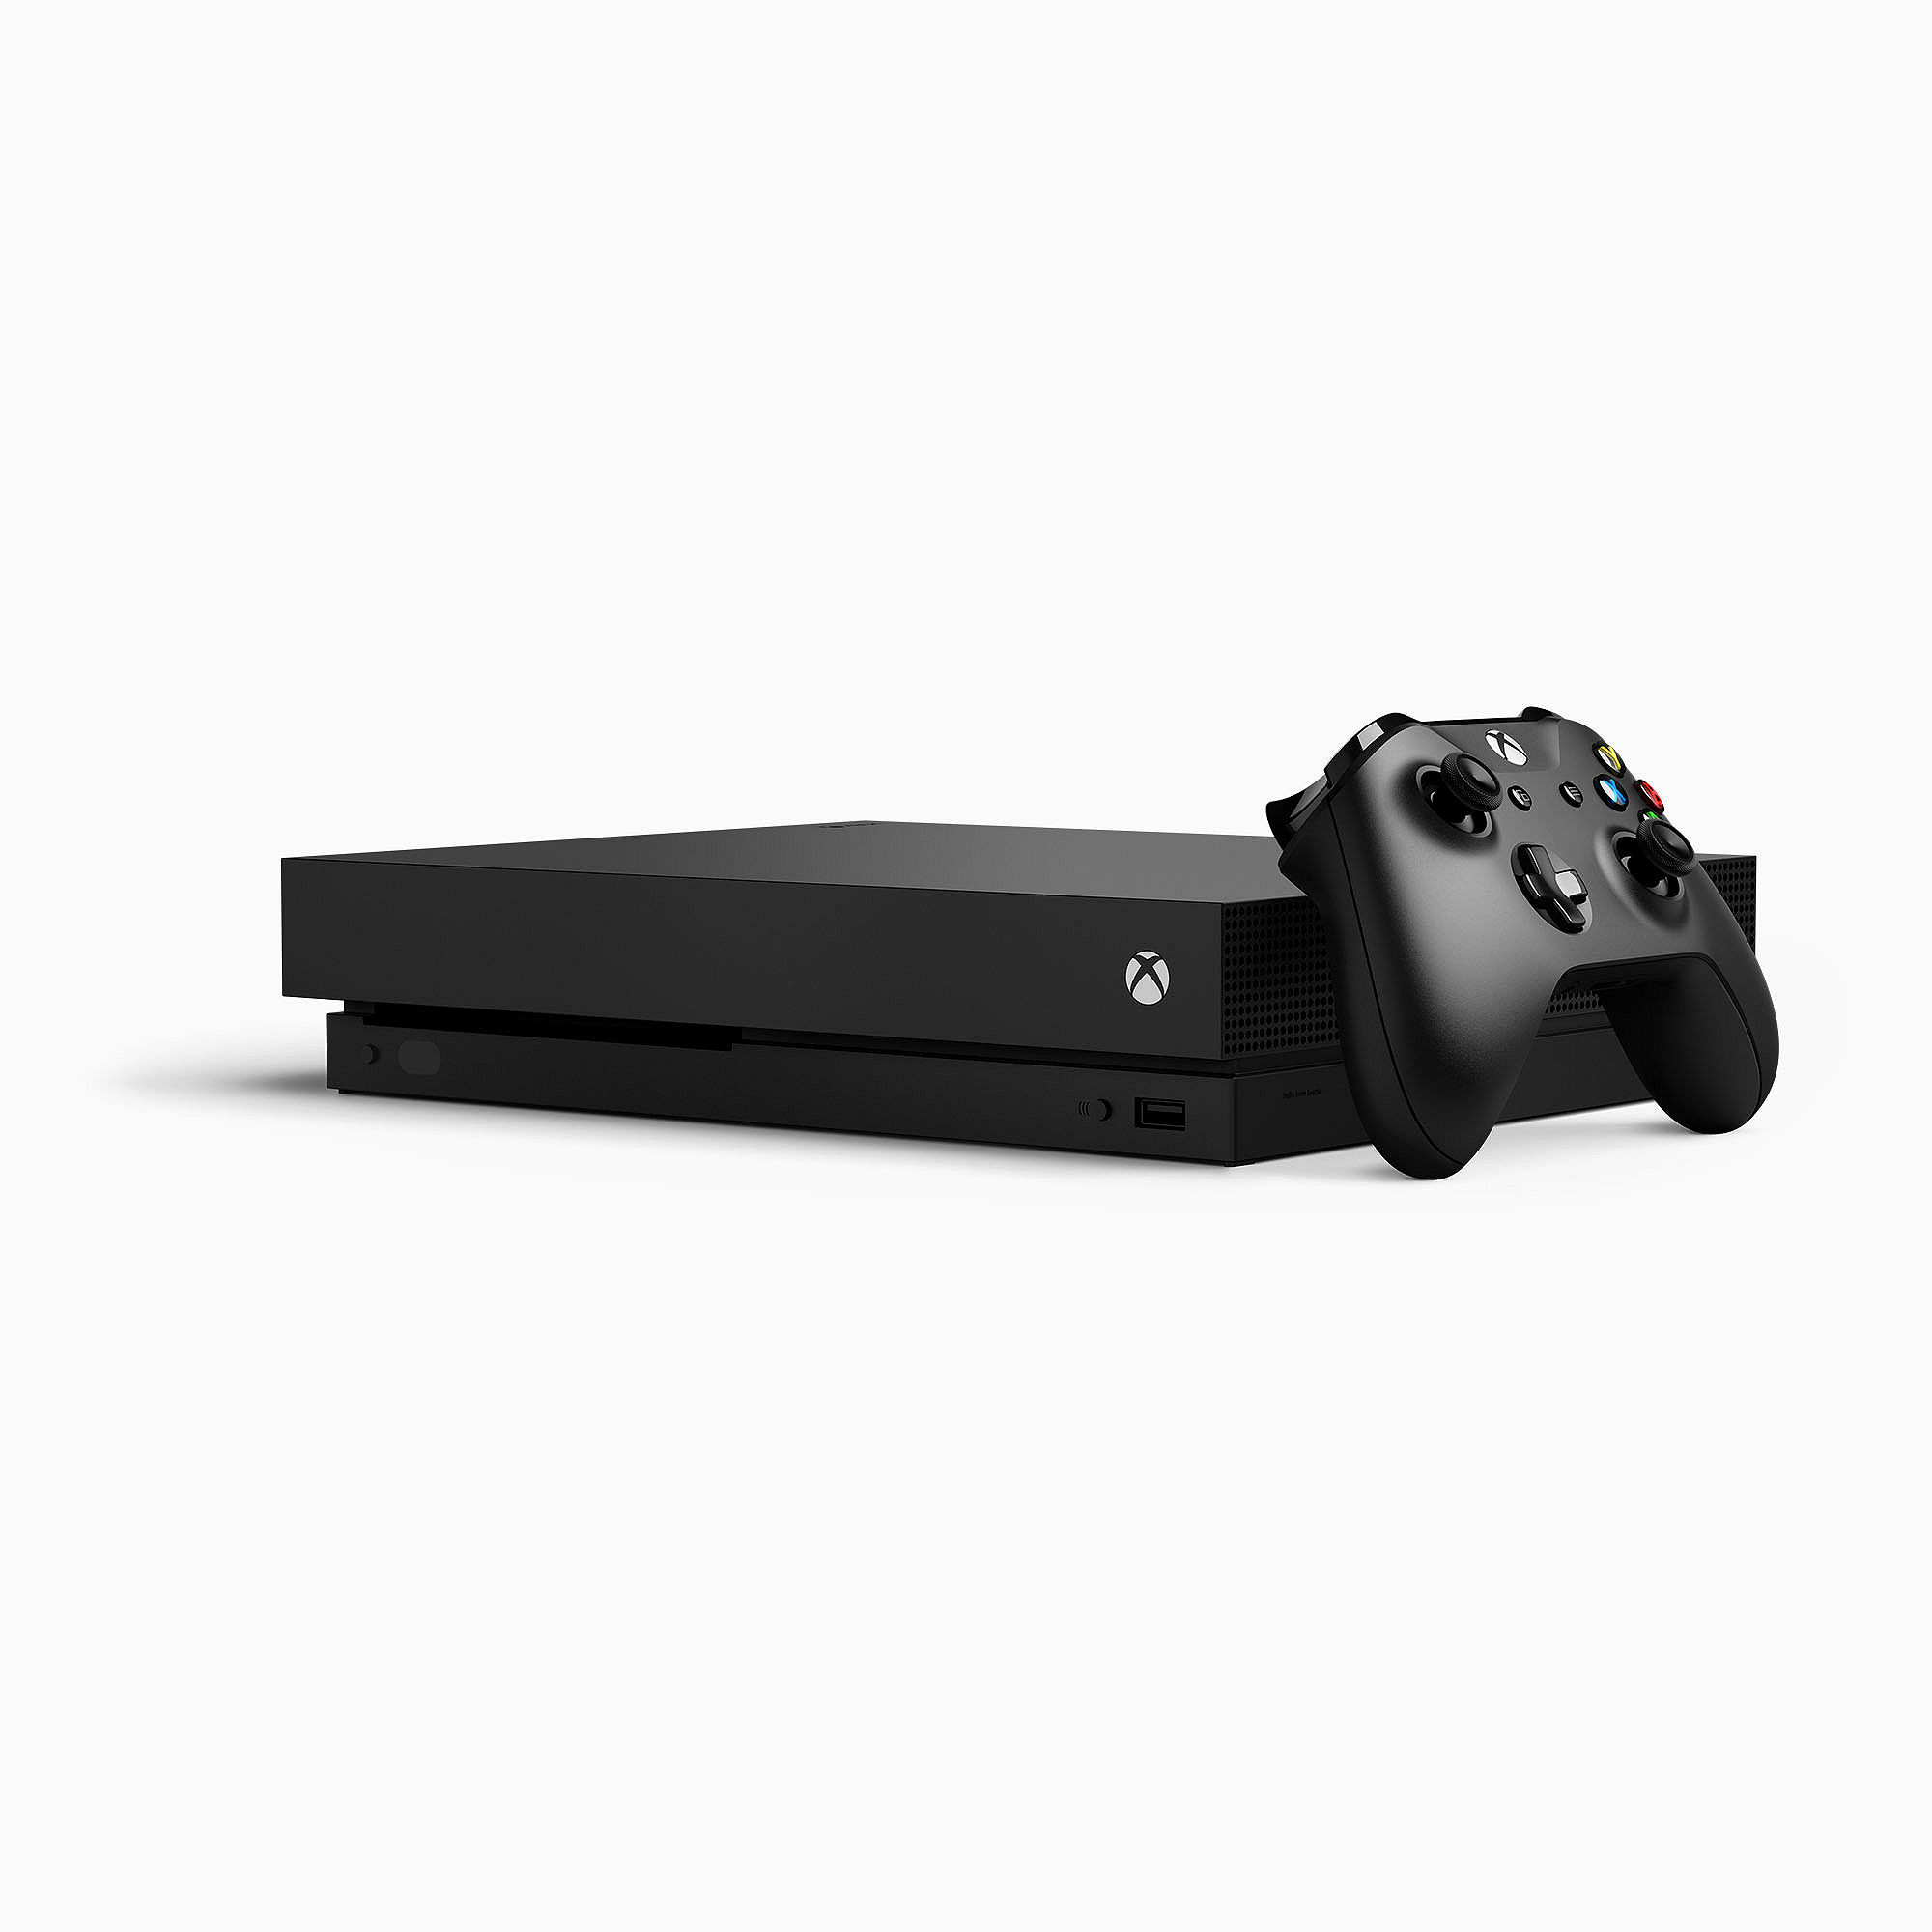 Microsoft Xbox One X 1TB Console, Black, CYV-00001 - image 3 of 3